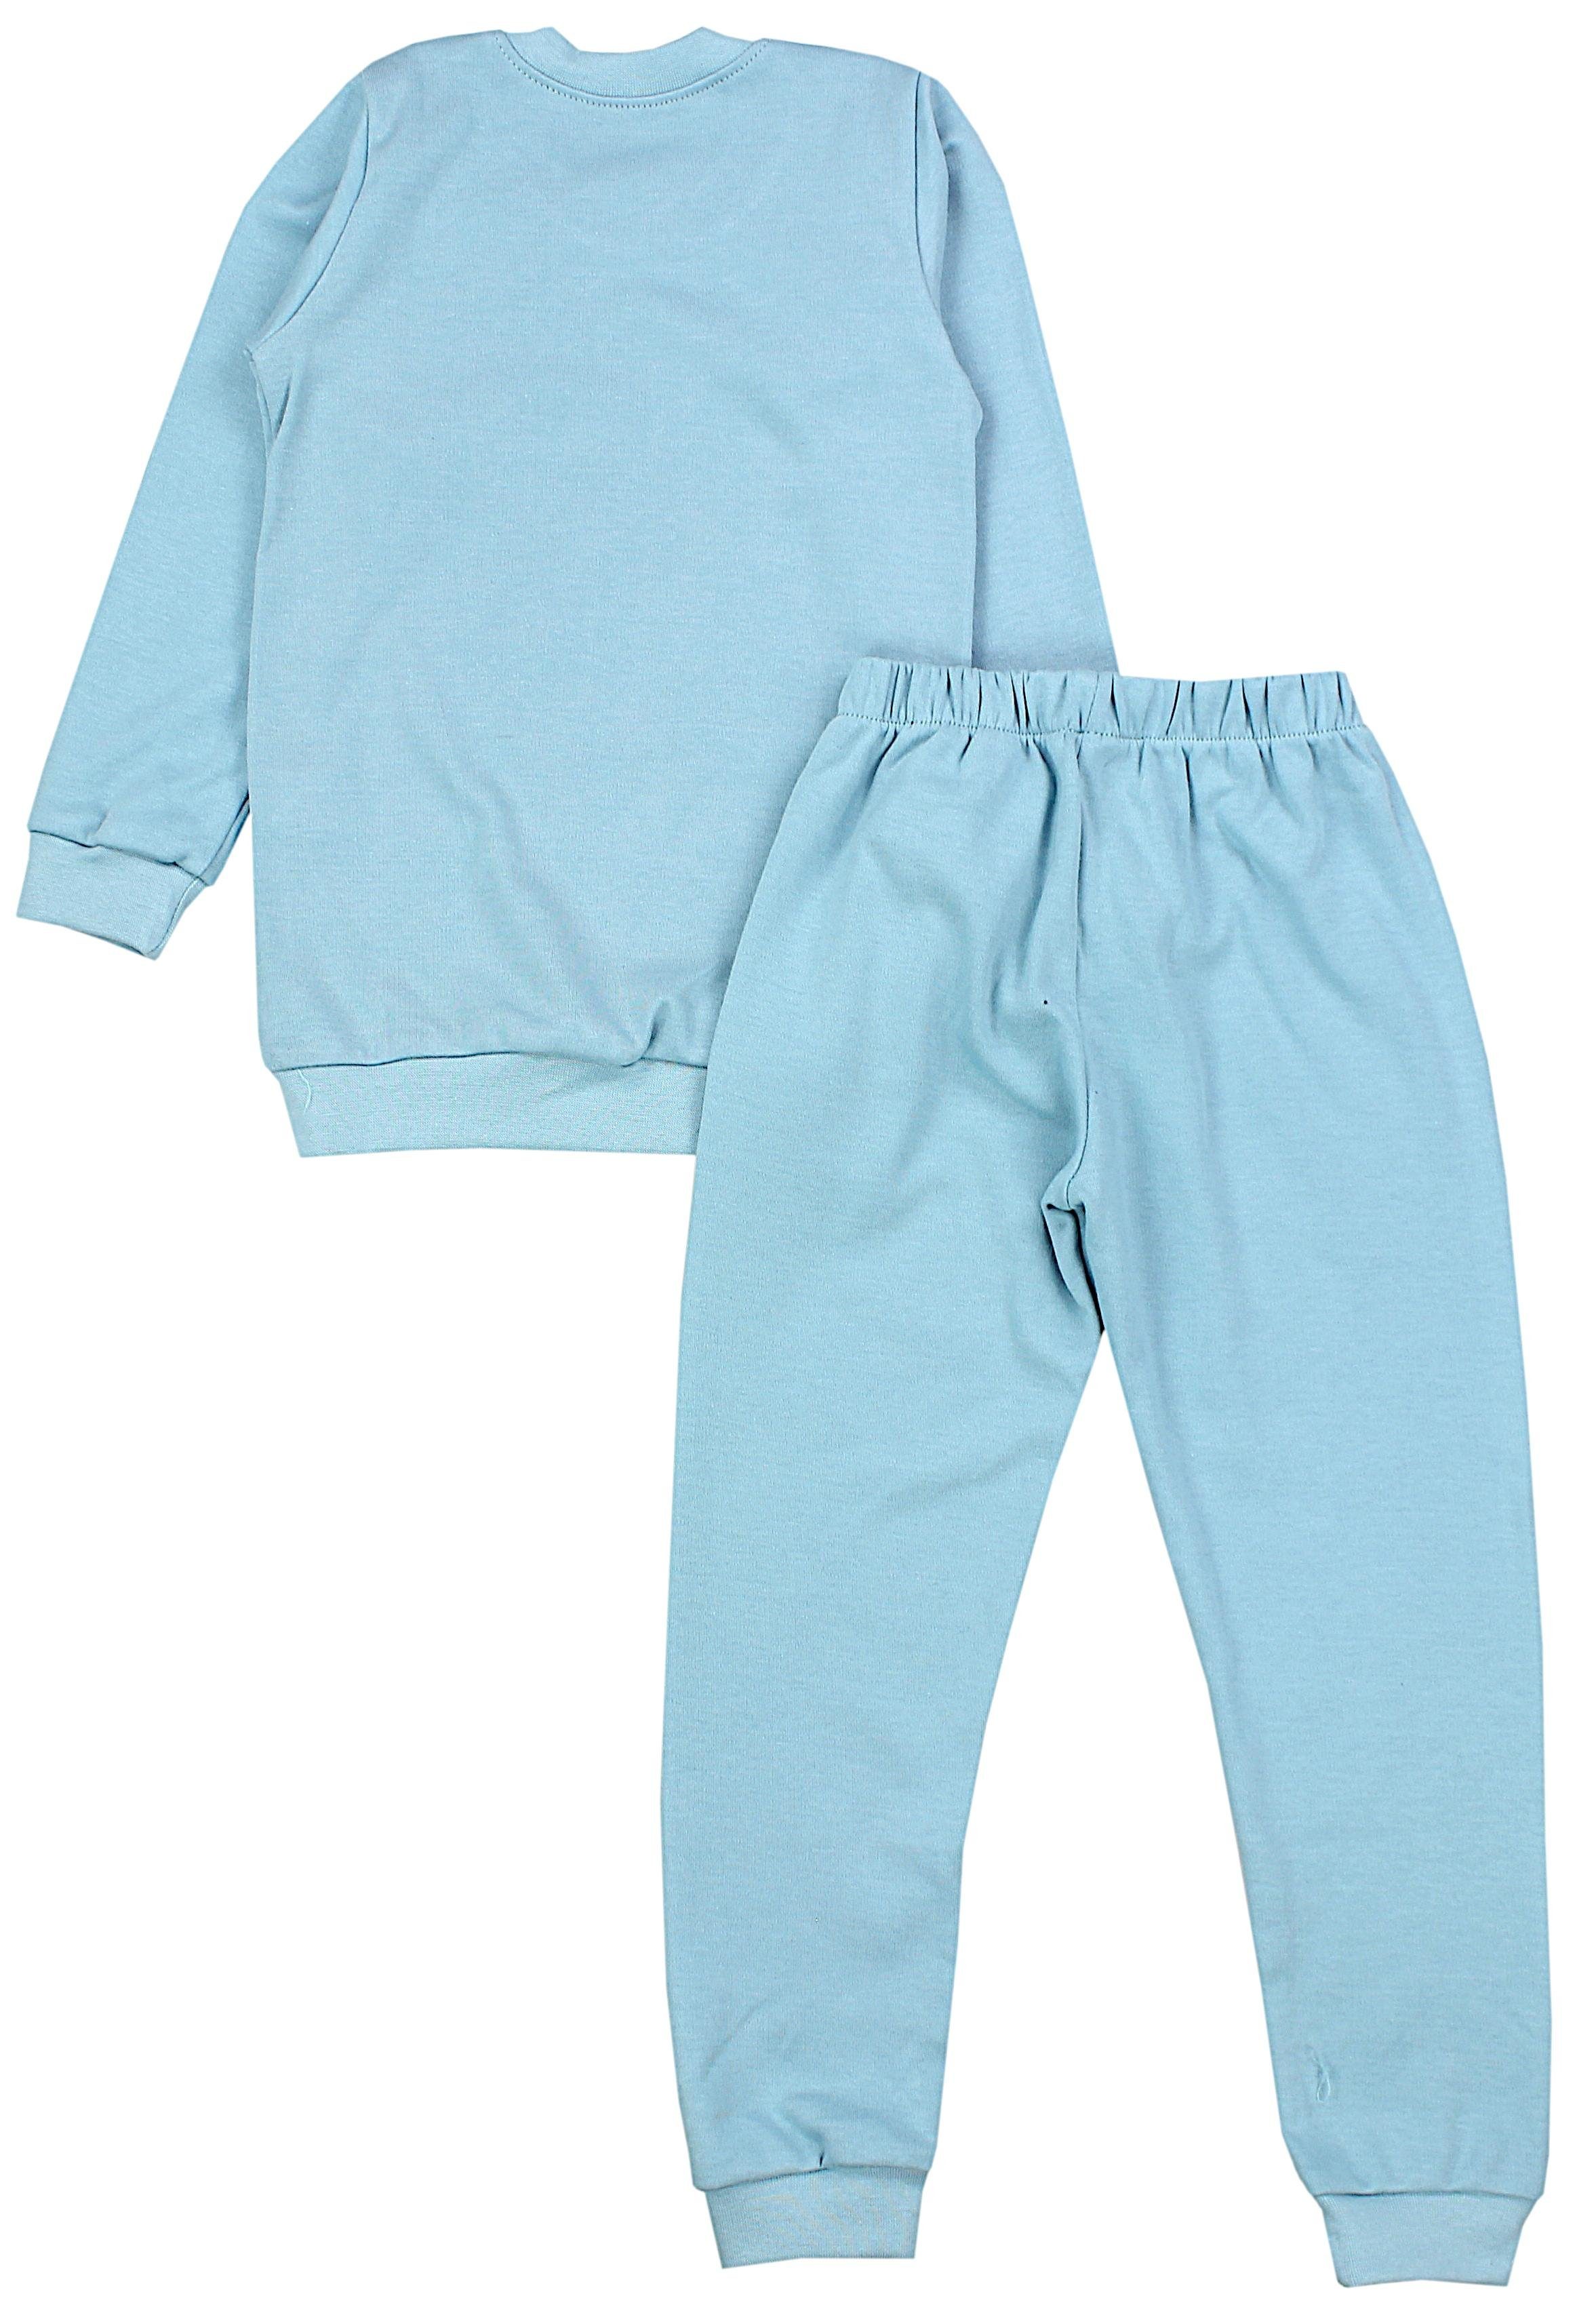 Schlafanzug NICE 2-teilig Nachtwäsche Langarm TupTam Schlafanzug Set Kinder Mintgrün Mädchen Pyjama Teddybär